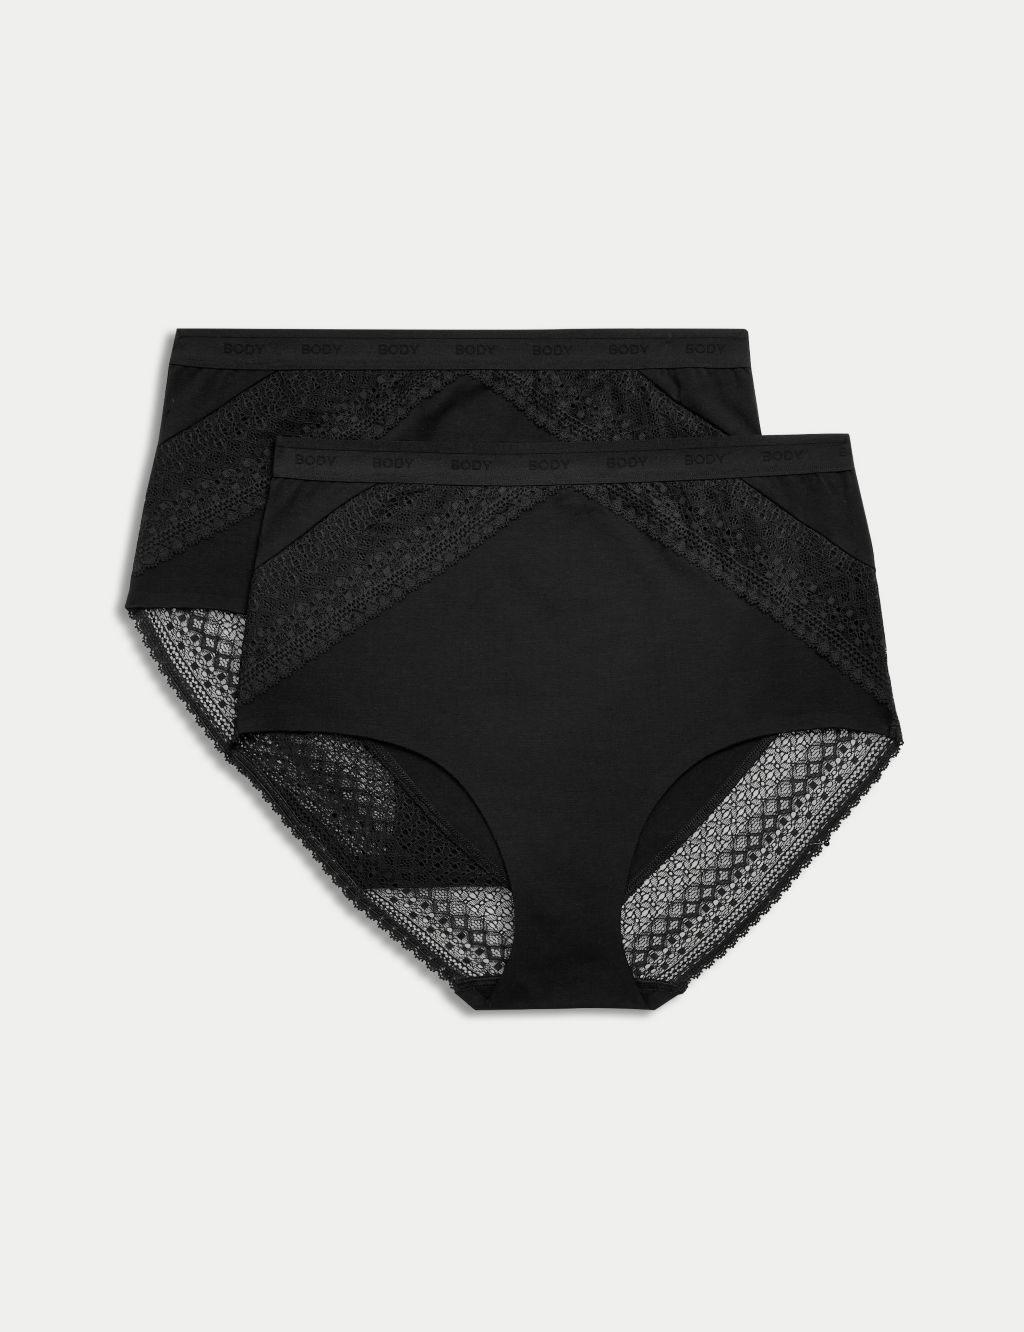 New Ladies Black / White Seamless Light Tummy Control Pants Underwear  Knickers